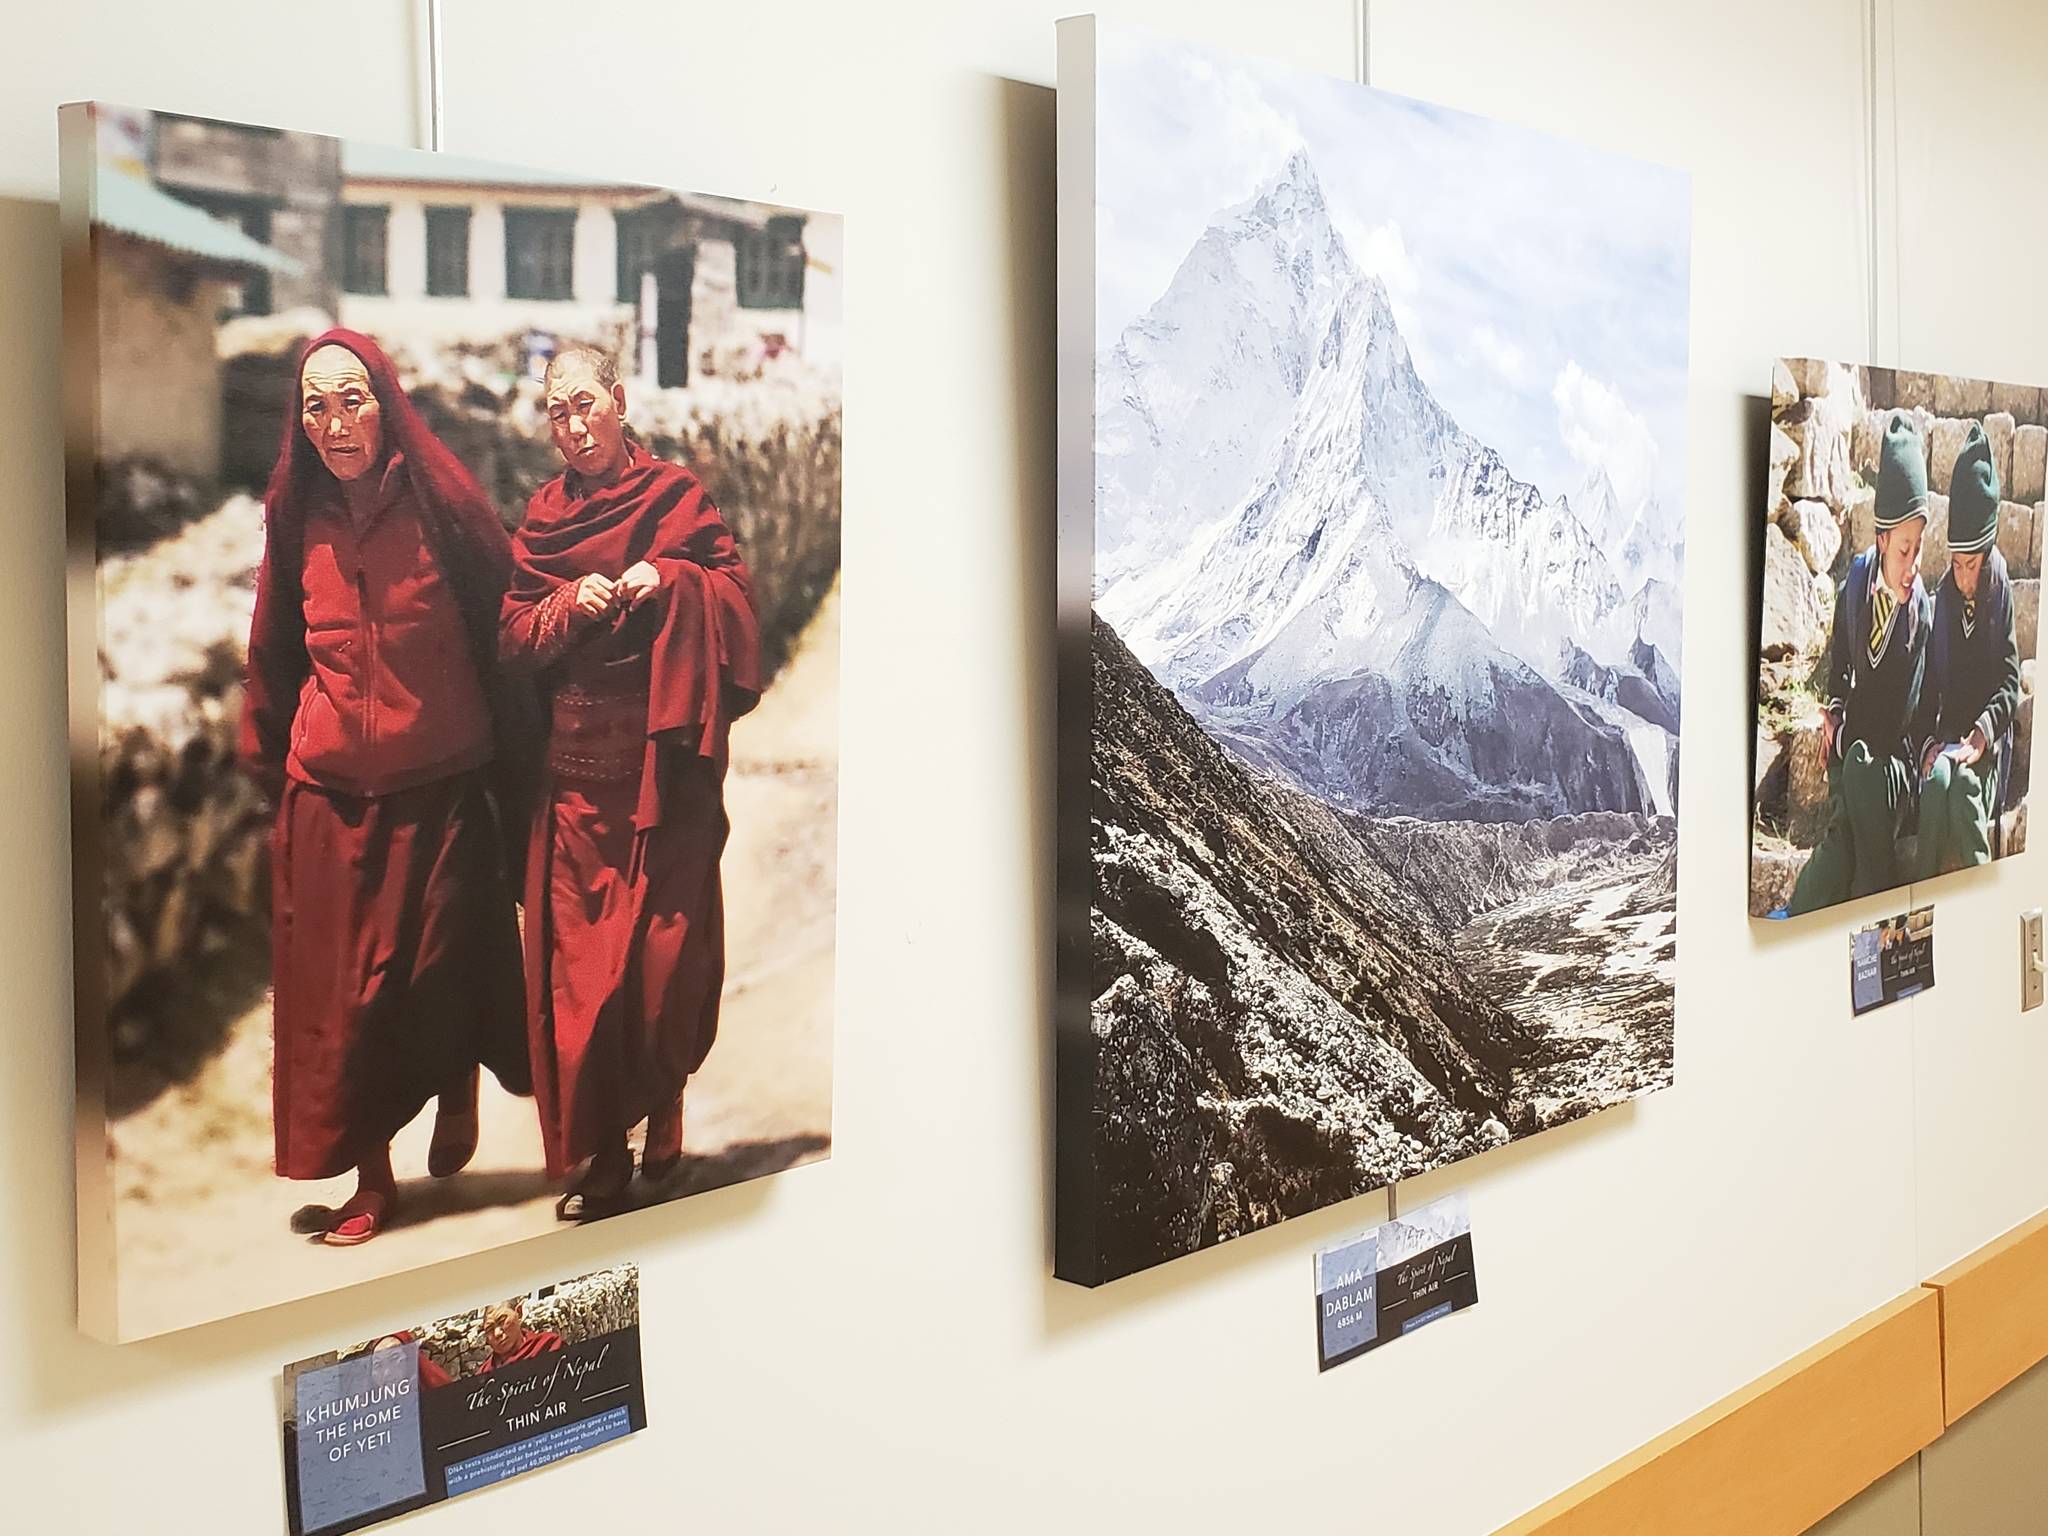 Photographs by Dr. Edson Knapp on exhibit at South Peninsula Hospital in Homer, Alaska. (Photo provided)